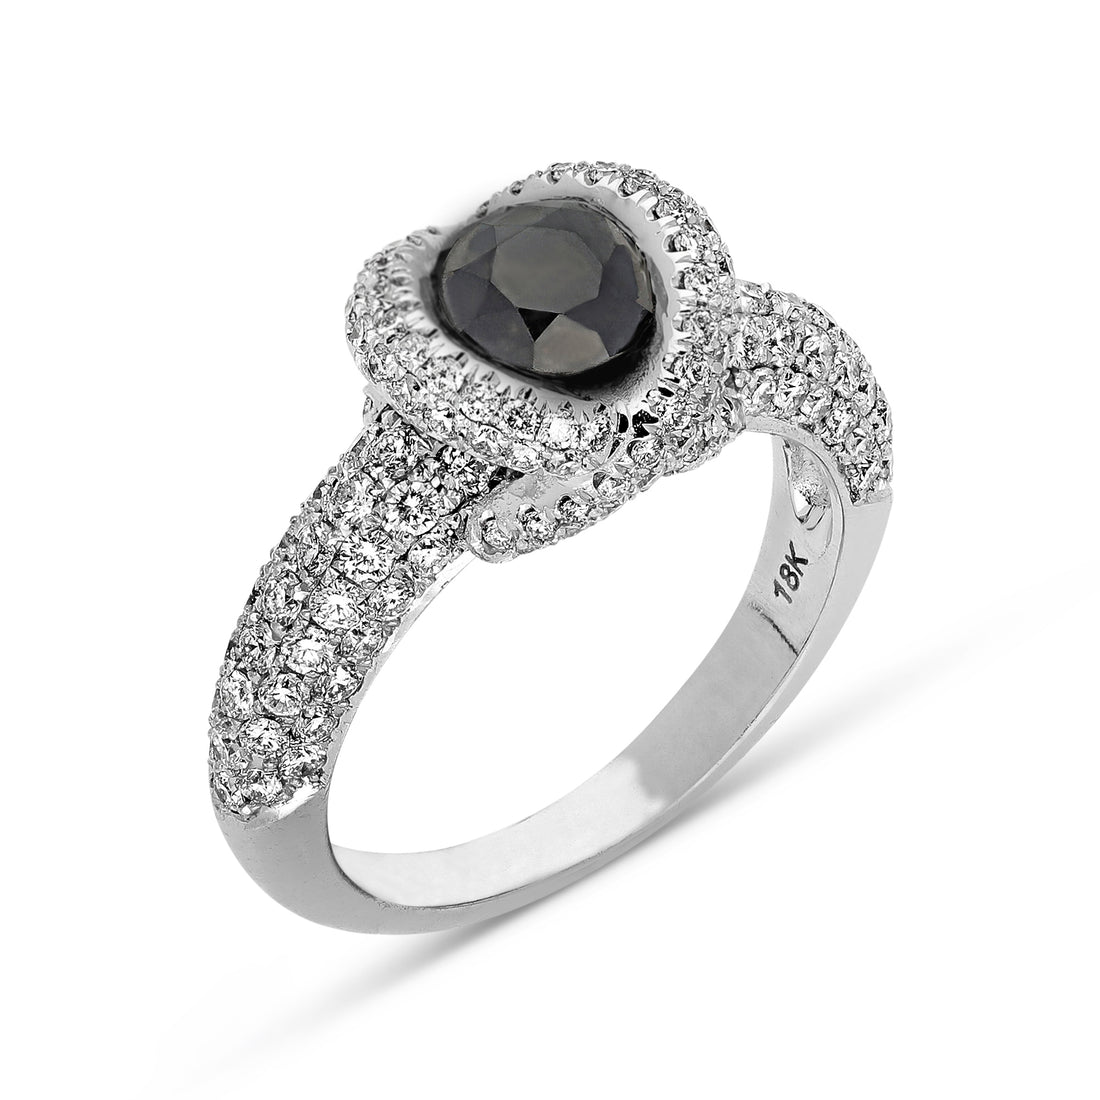 Black Diamond Engagement Ring - 1.65 Carat